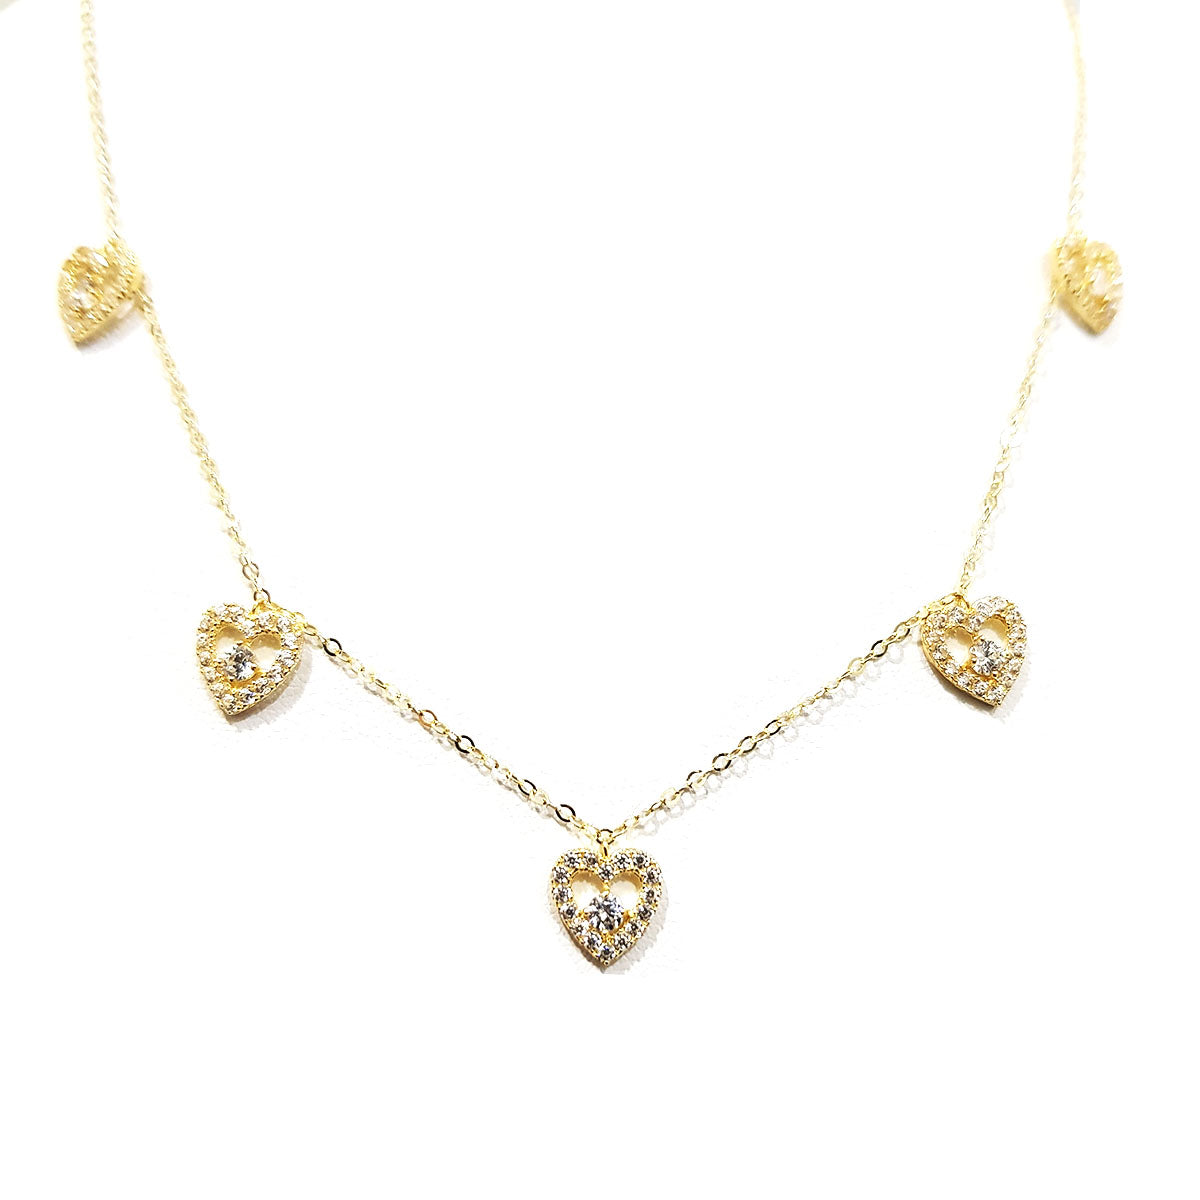 18K Pure Gold Heart Design w/ Zircon Stone Necklace